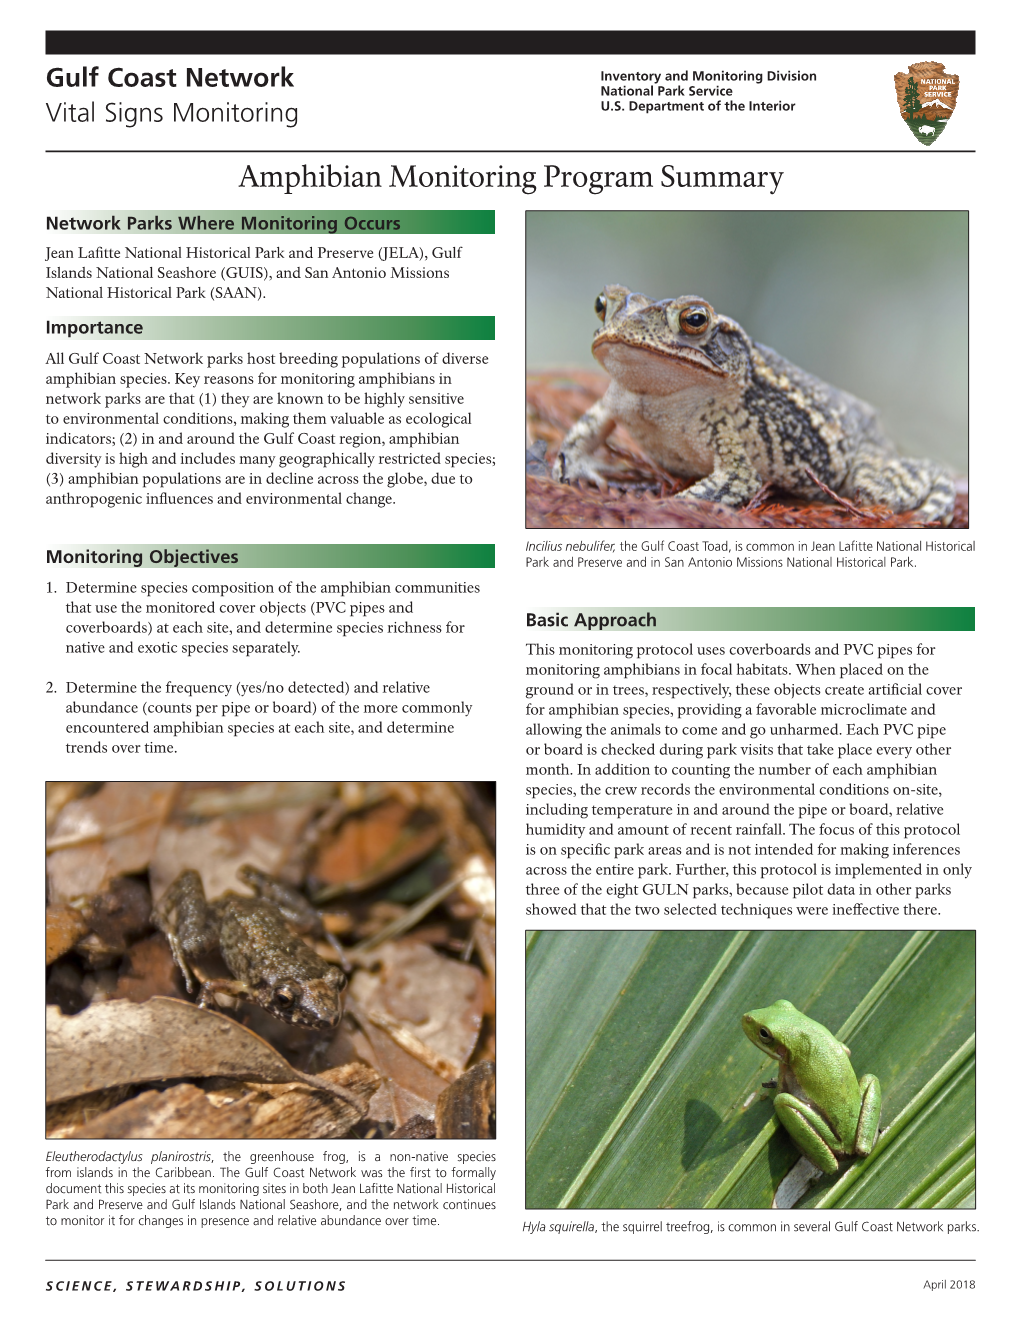 Amphibian Monitoring Program Summary